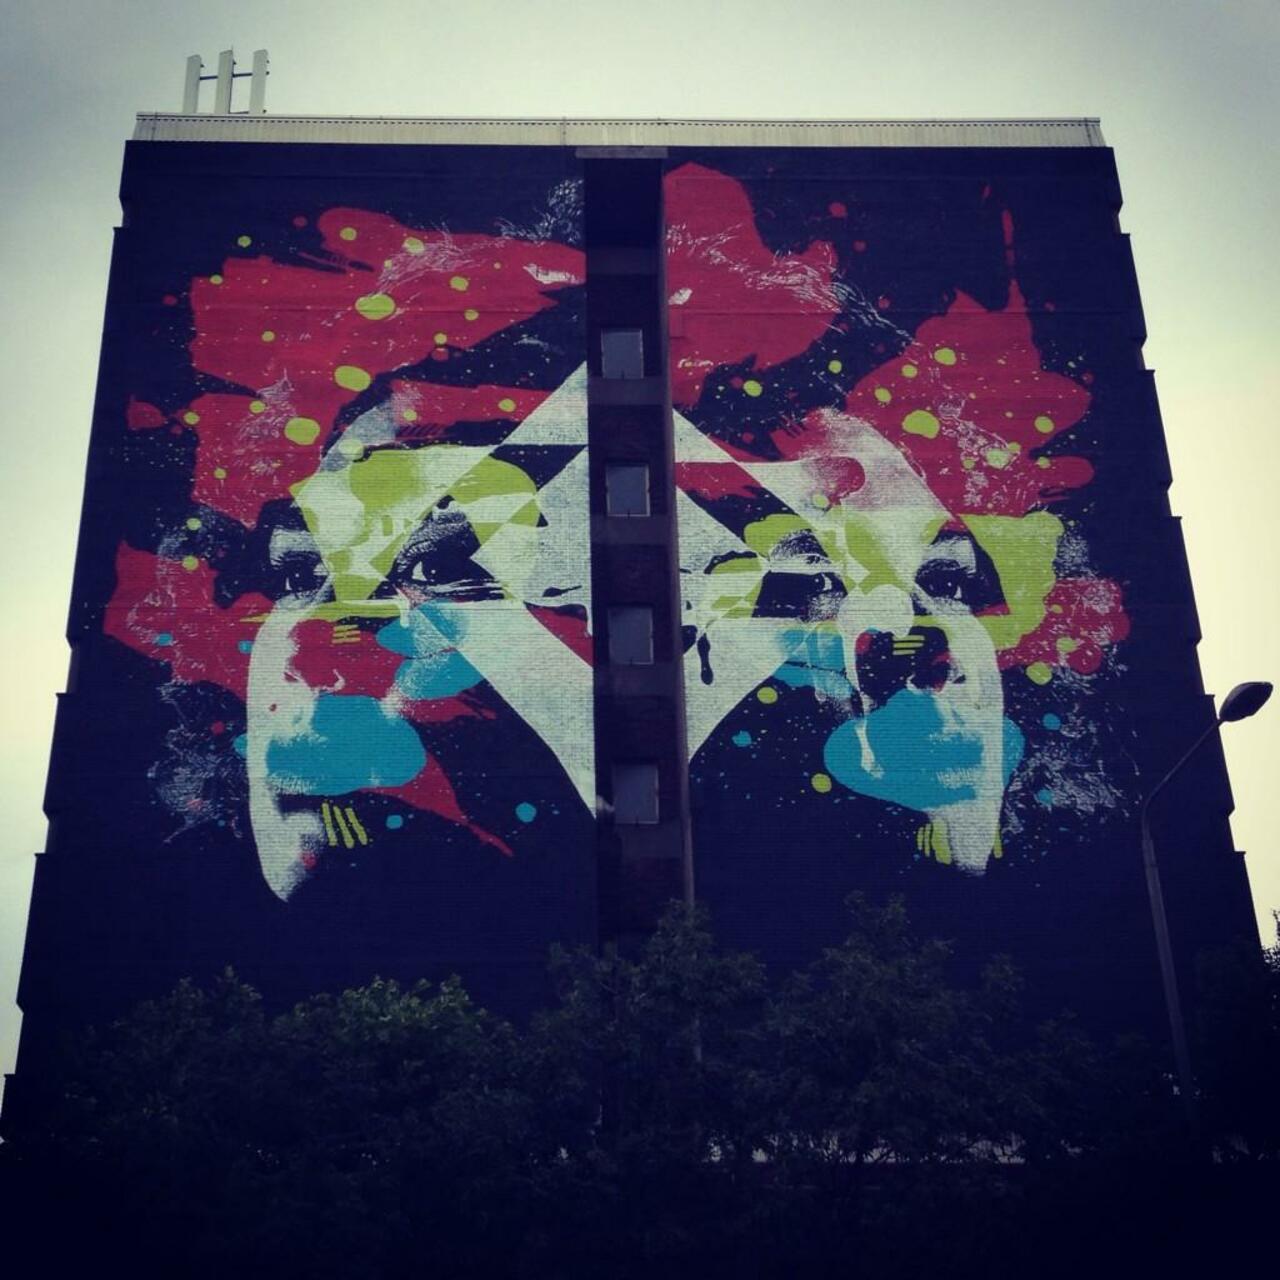 #Glasgow has got some decent work around! #street #art #design #print #graffiti  http://t.co/VevFs6GyYW